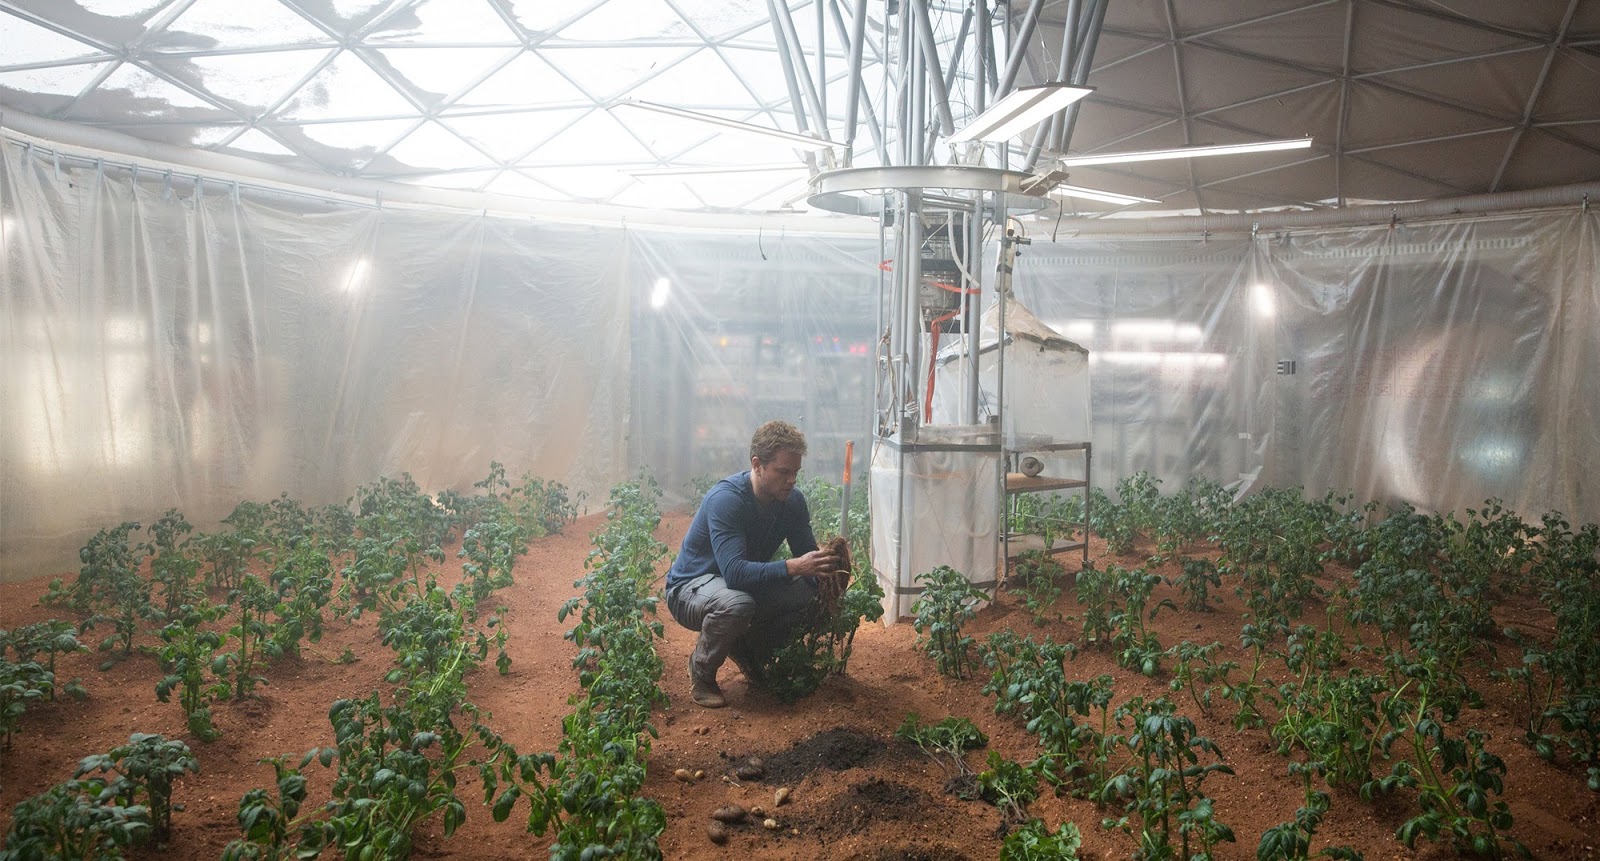 The Martian movie image 1b (greenhouse).jpg